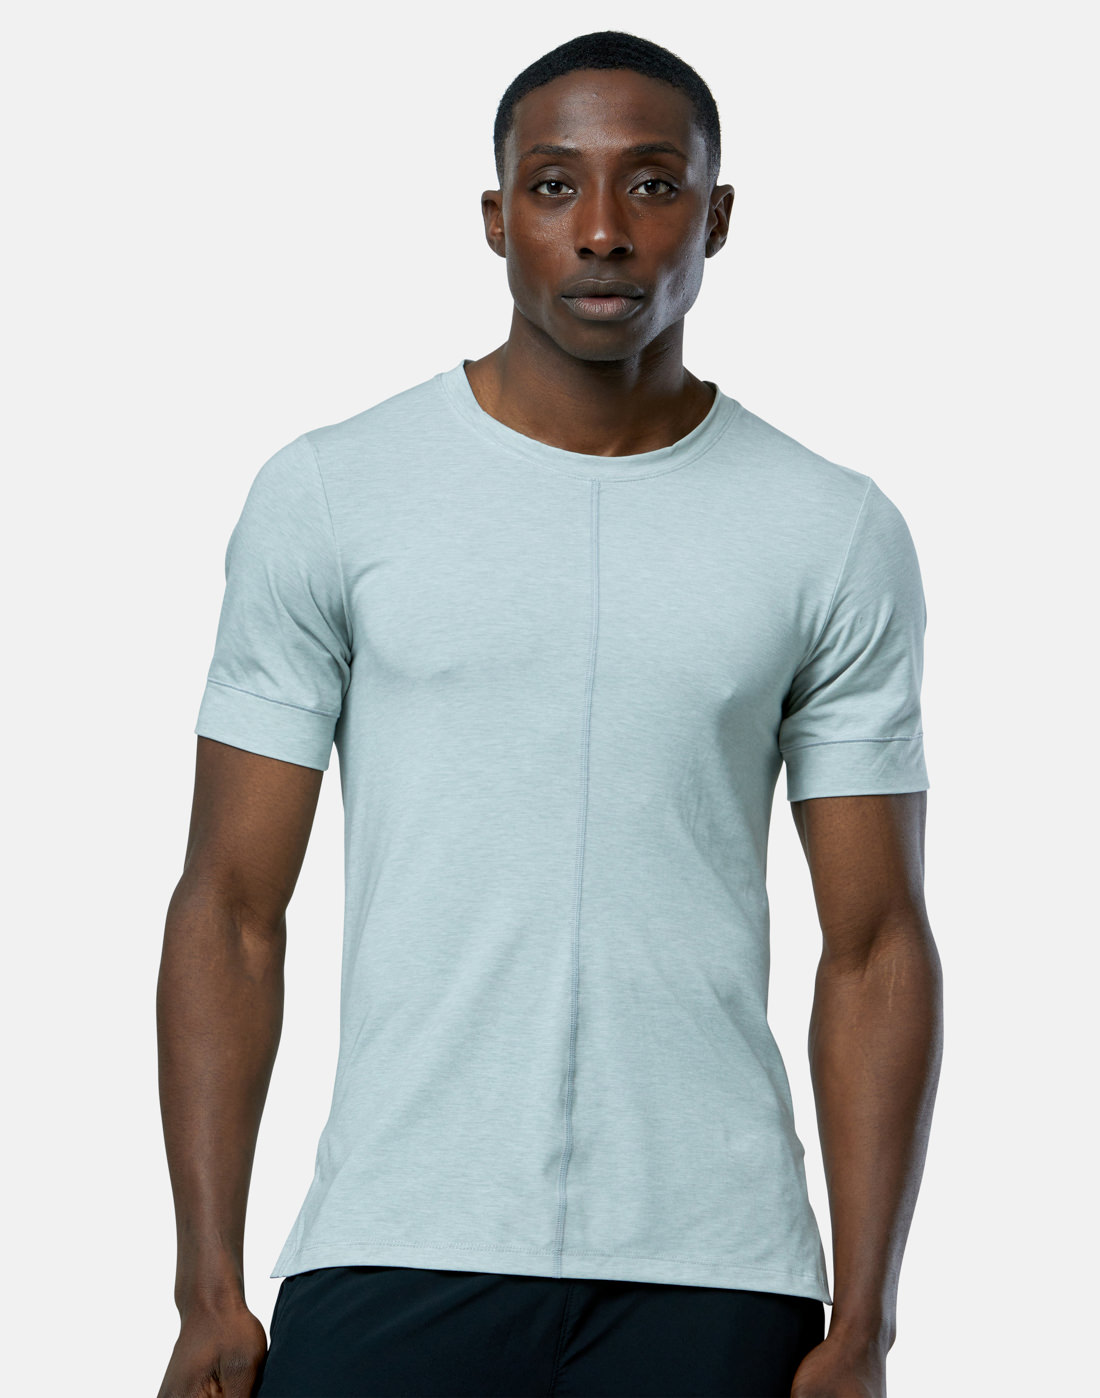 Nike Mens Dry Yoga T-Shirt - Grey | Life Style Sports EU